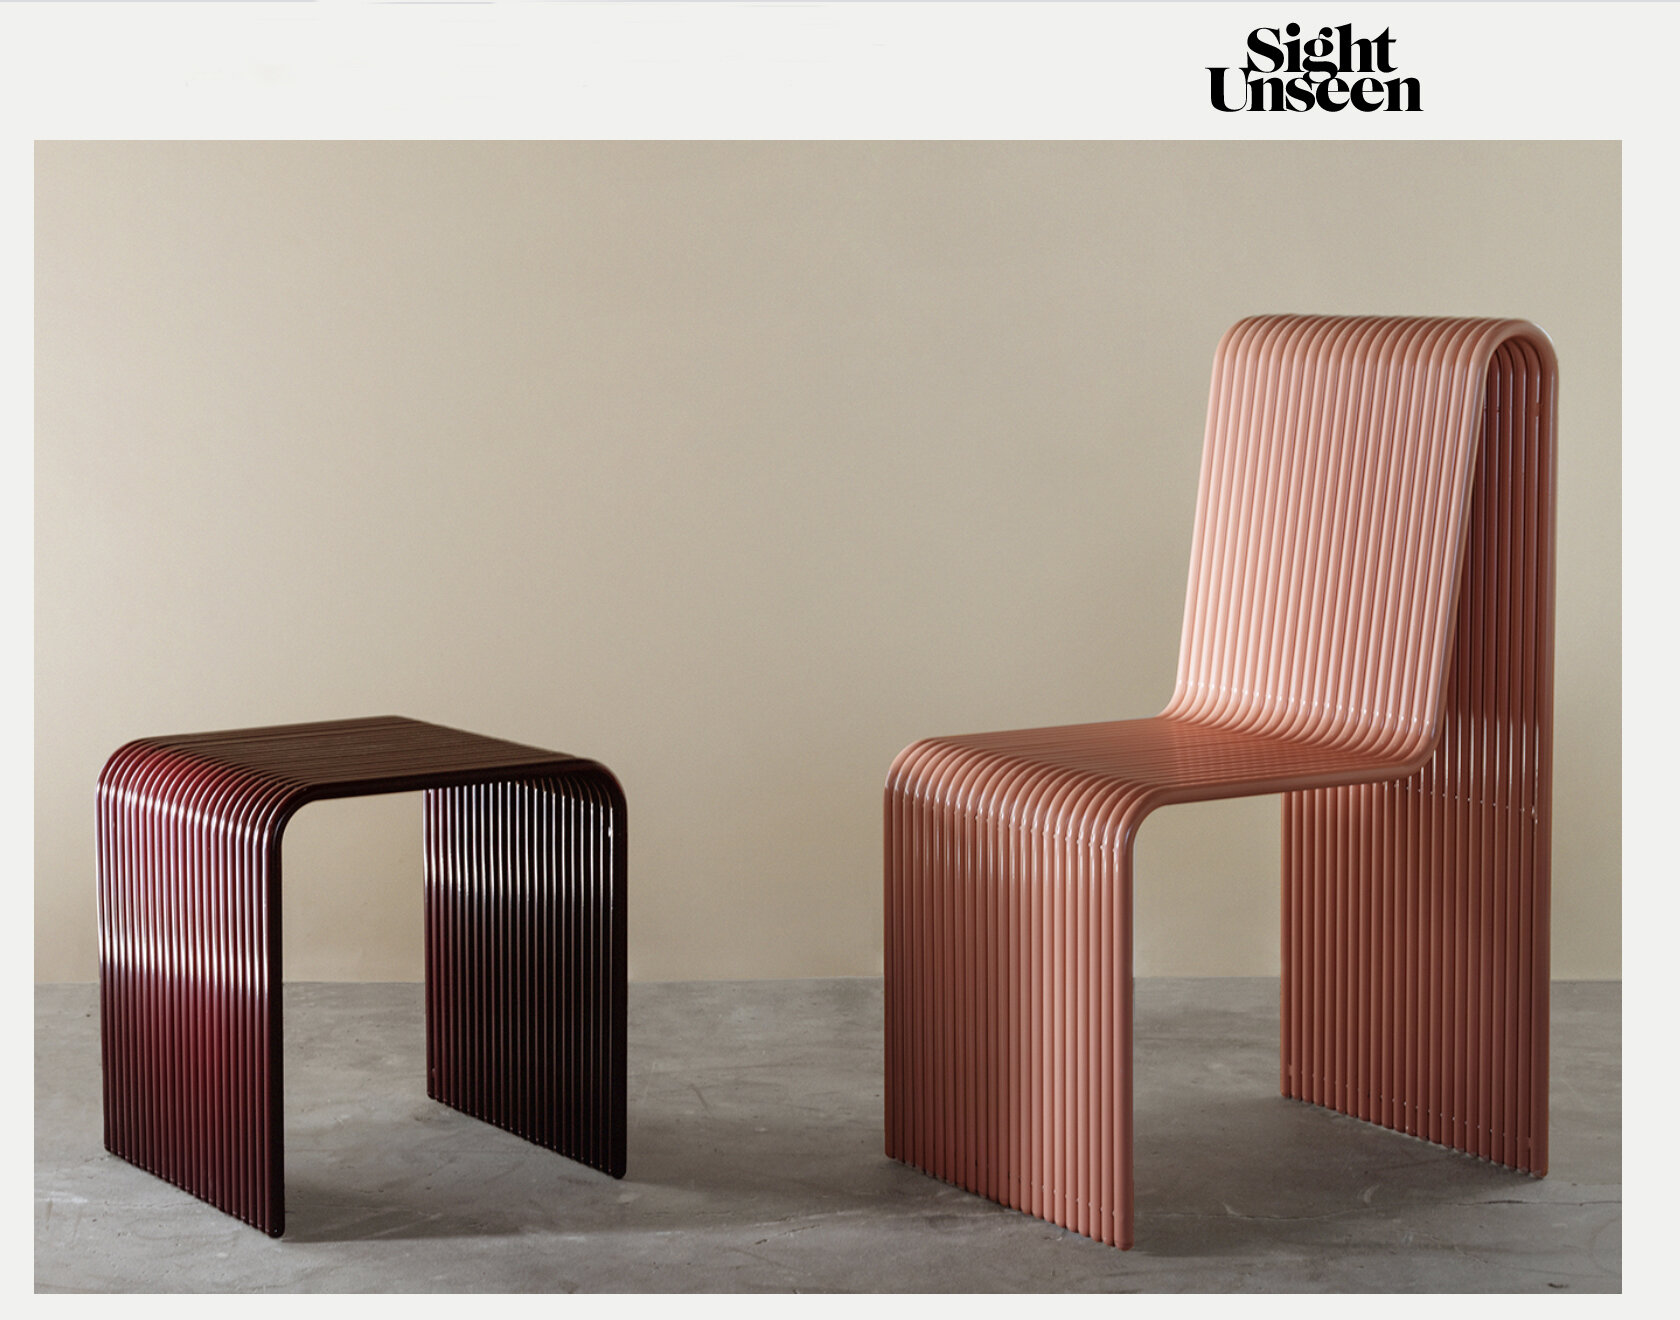 Furniture designed by Laun